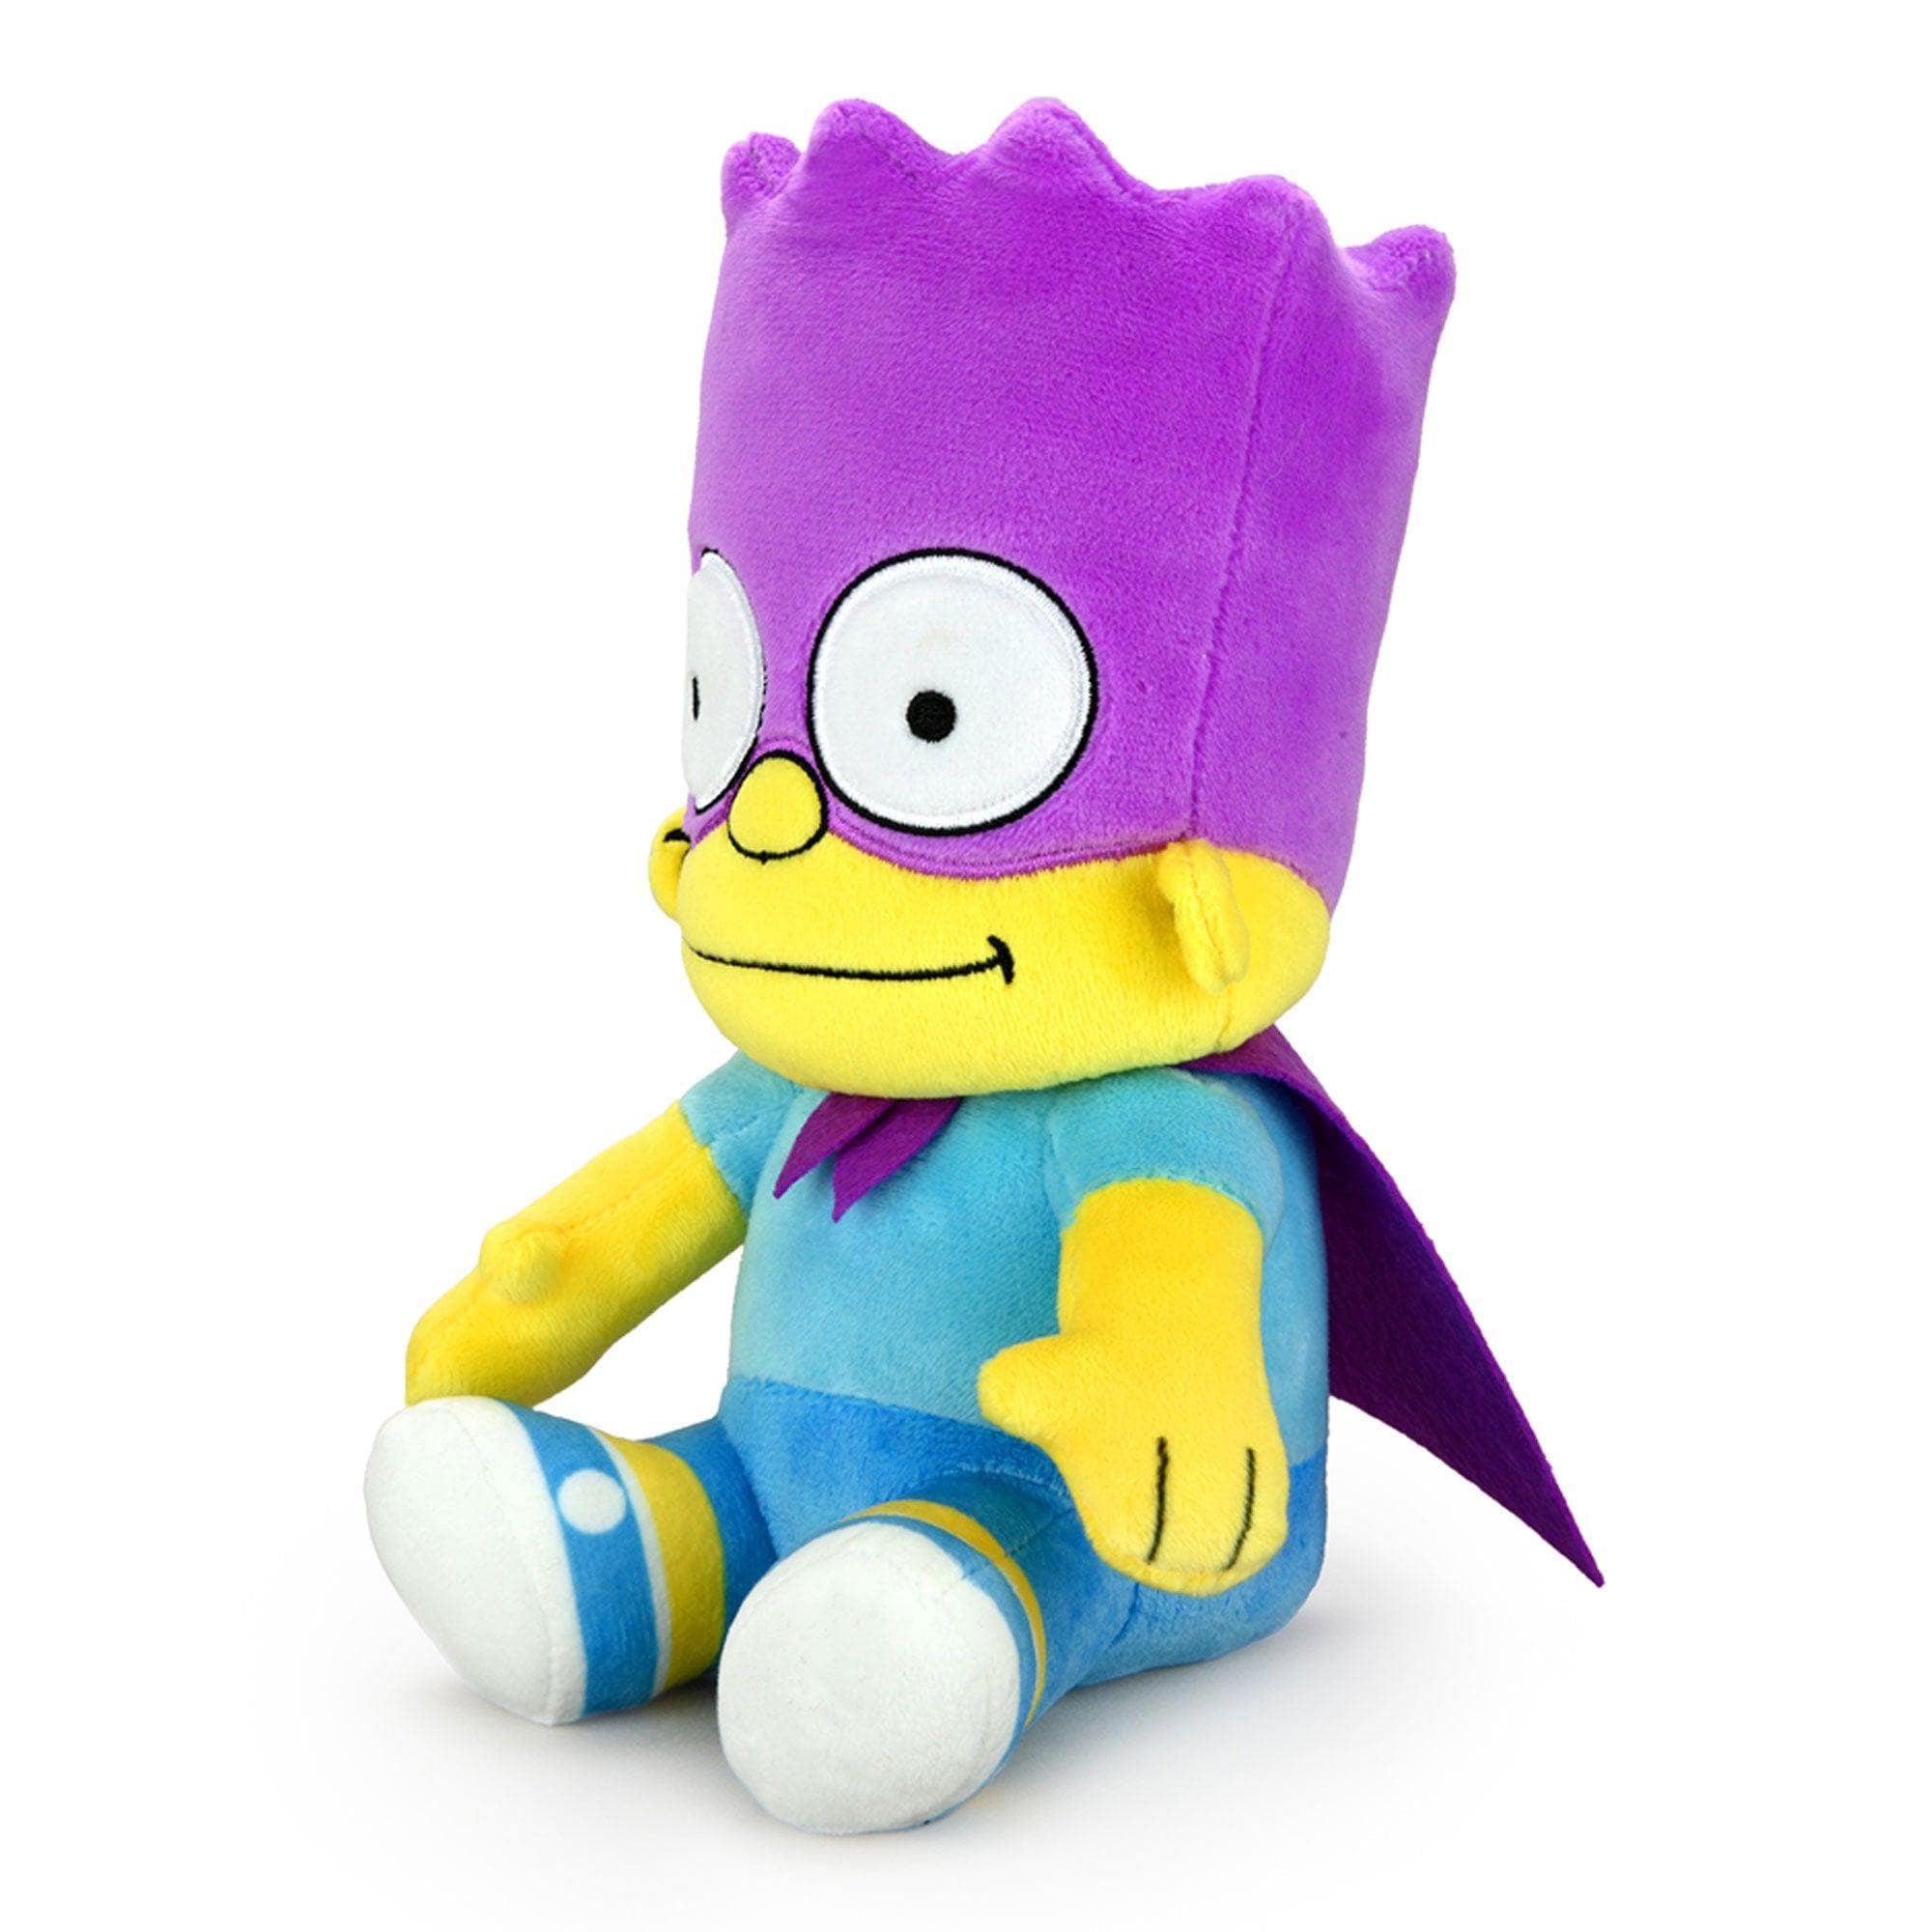 Kidrobot - The Simpsons Bartman 8" Phunny Plush - costumes.com